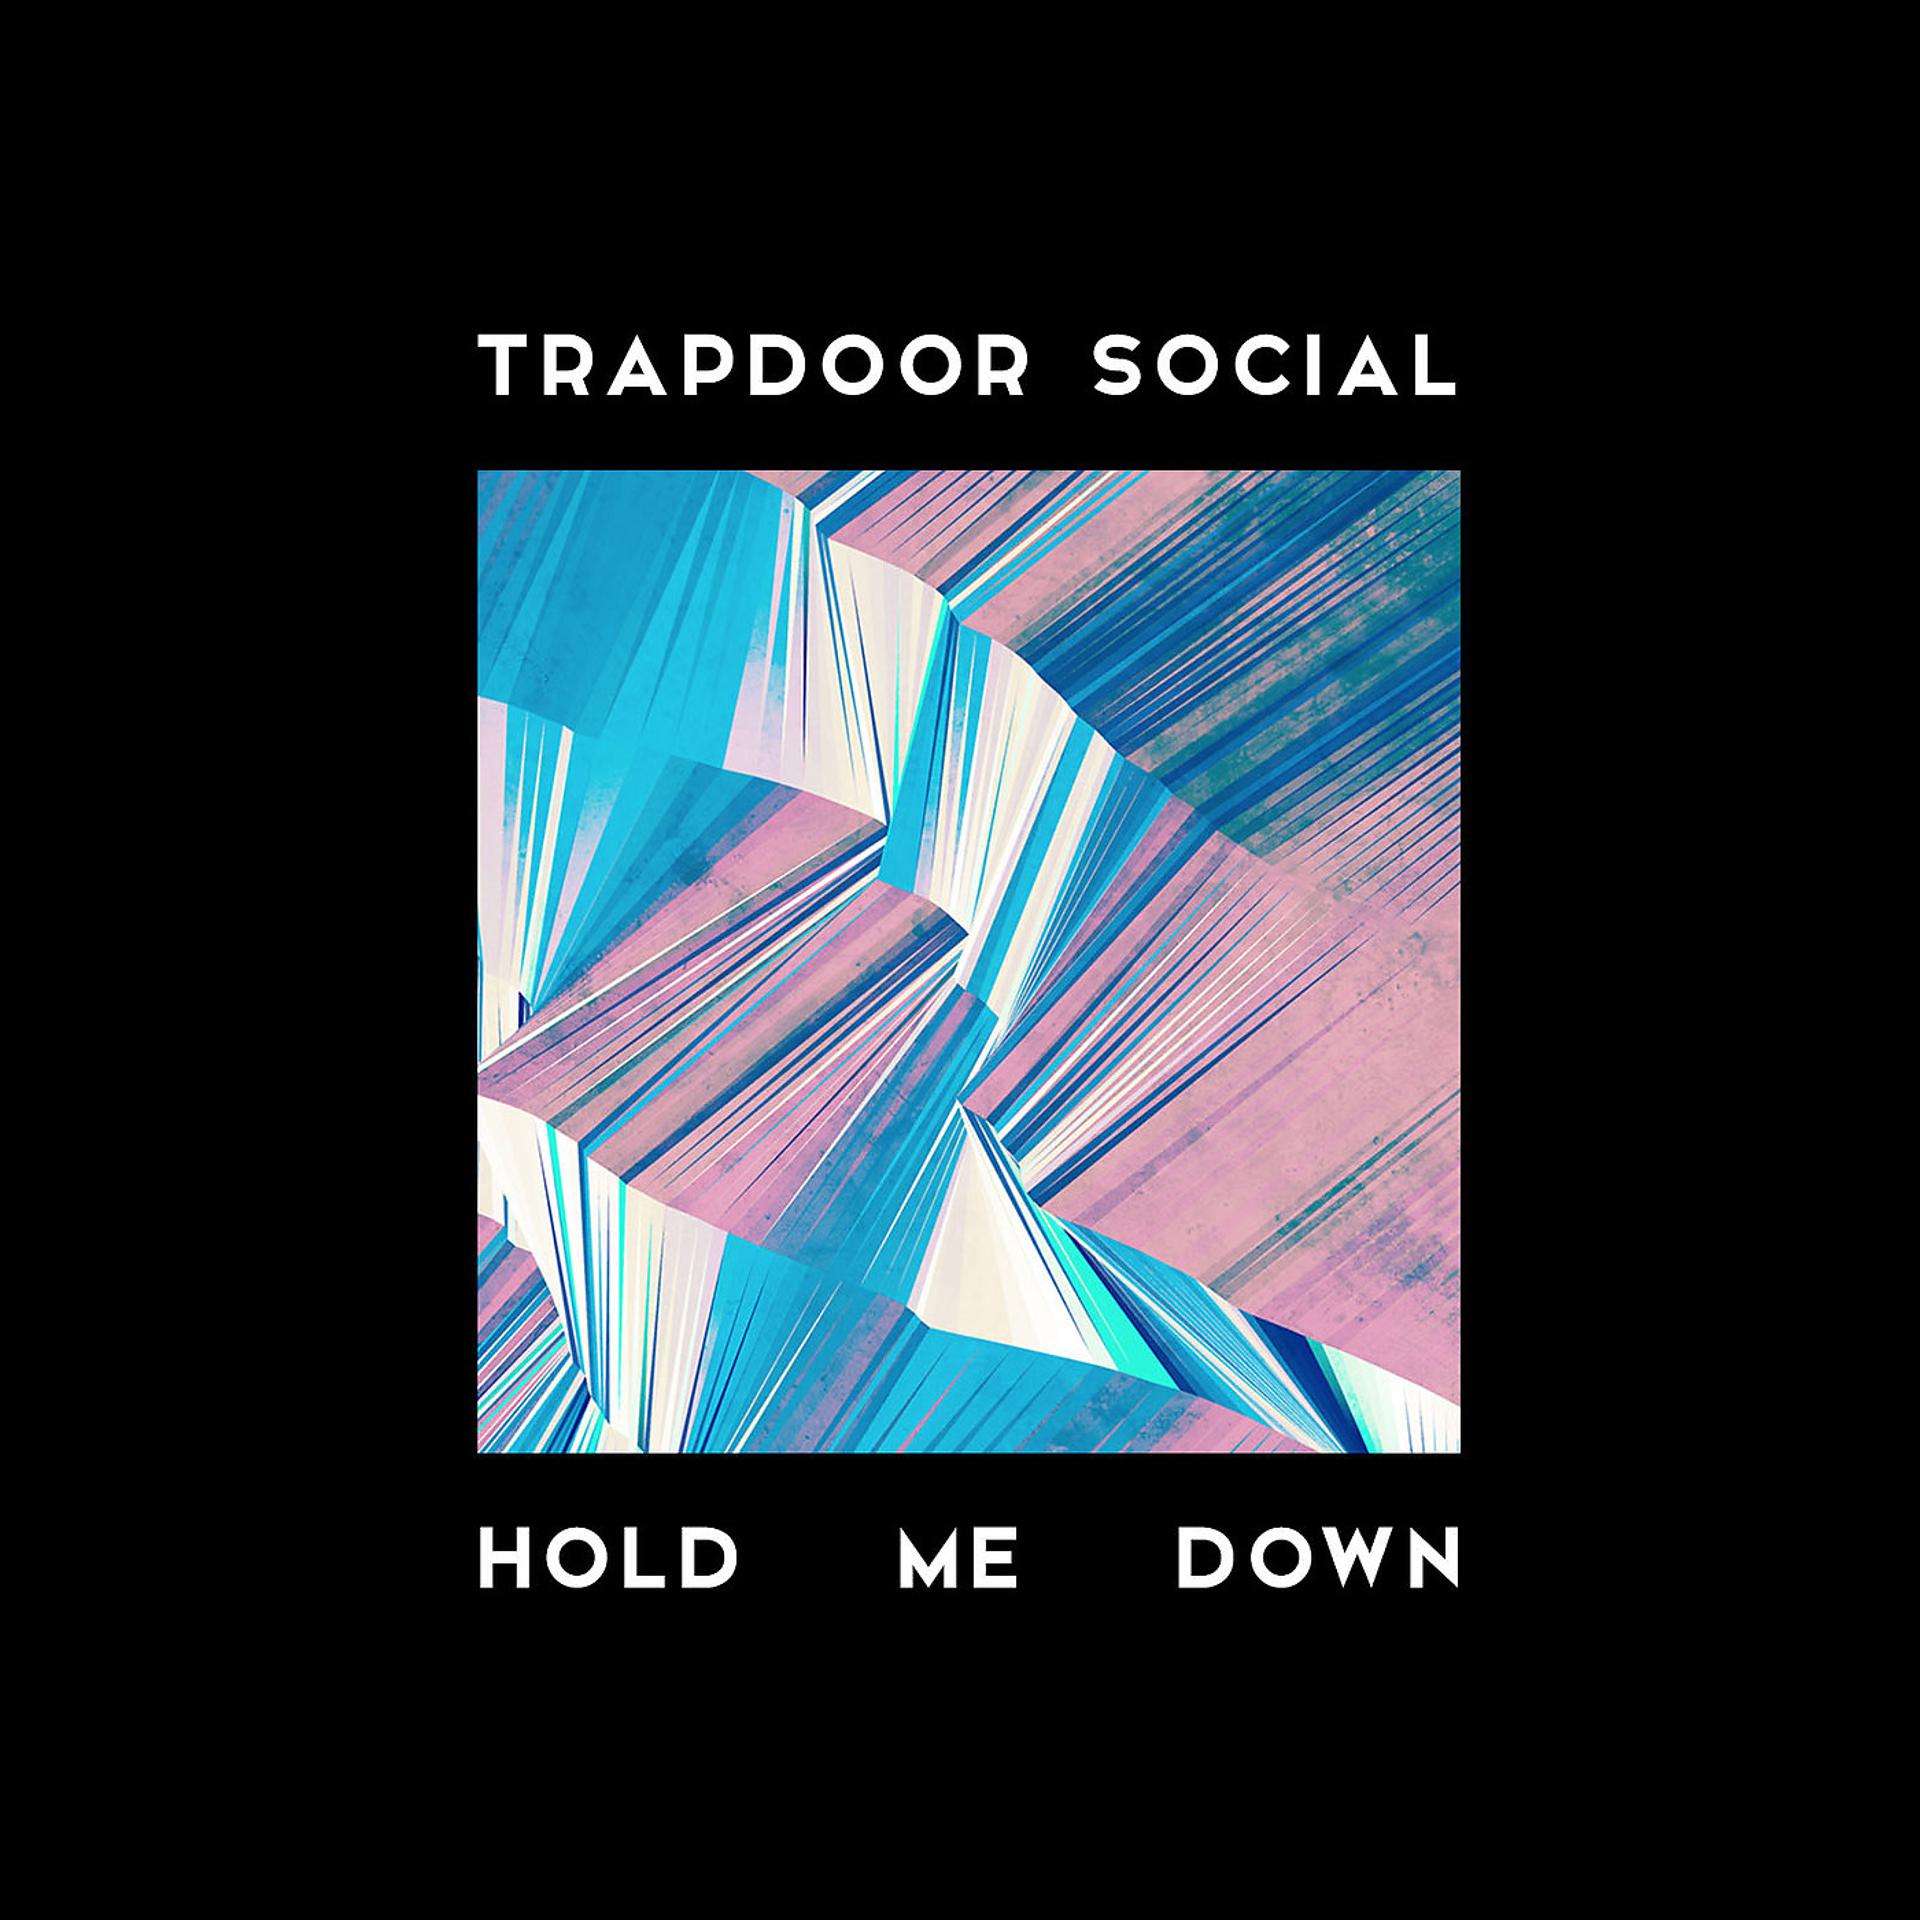 Holding me down. Trapdoor social Moonlit Hearts.